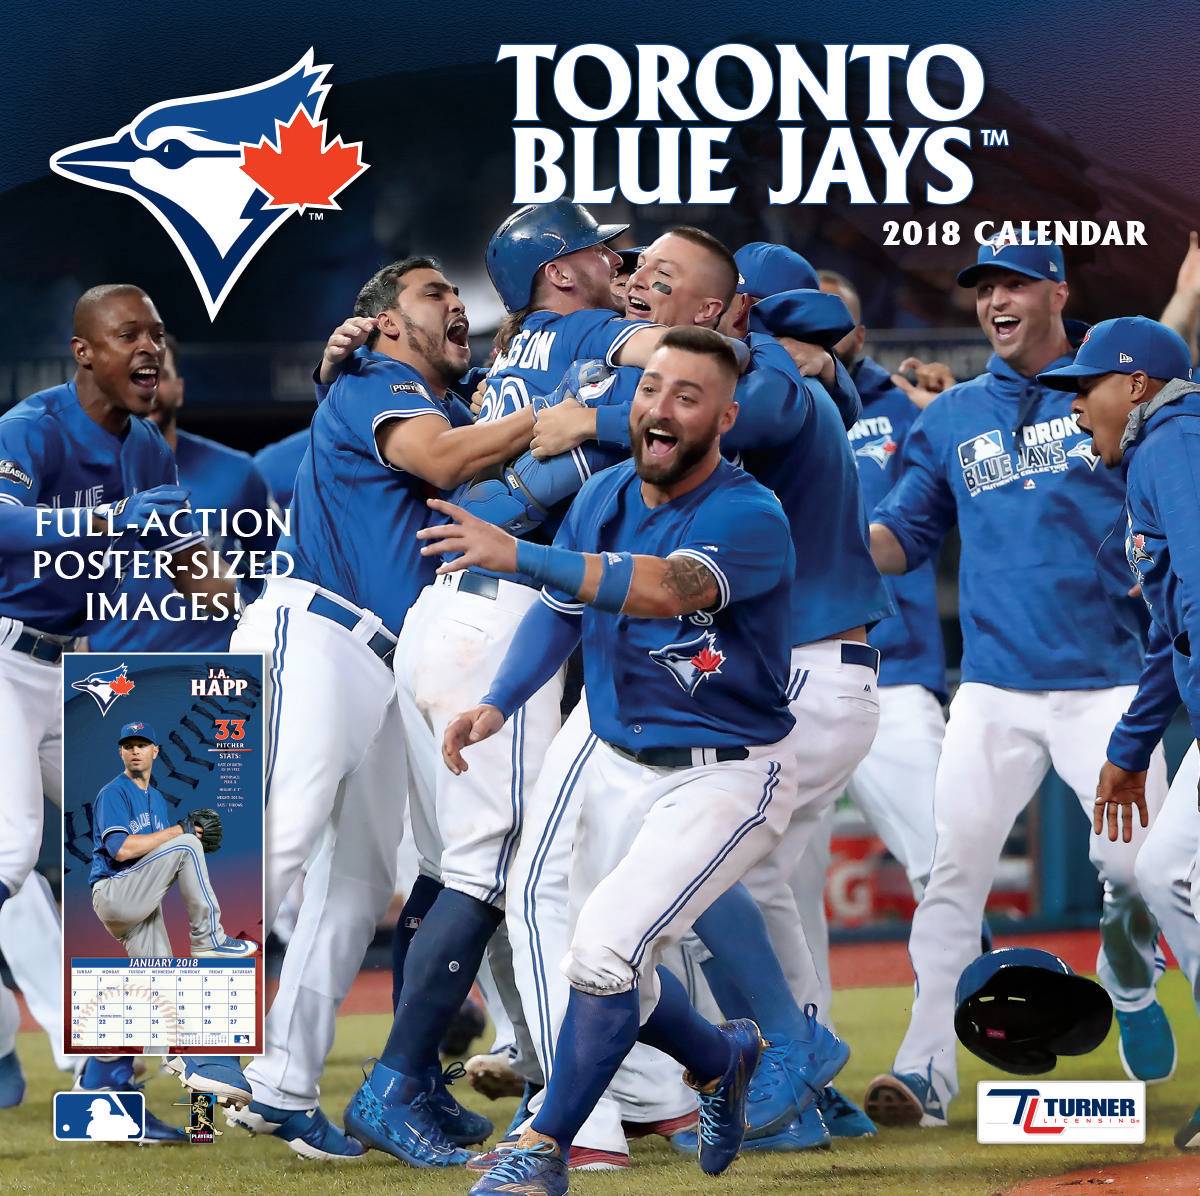 Turner 2018 MLB Toronto Blue Jays Wall Calendar Играландия интернет